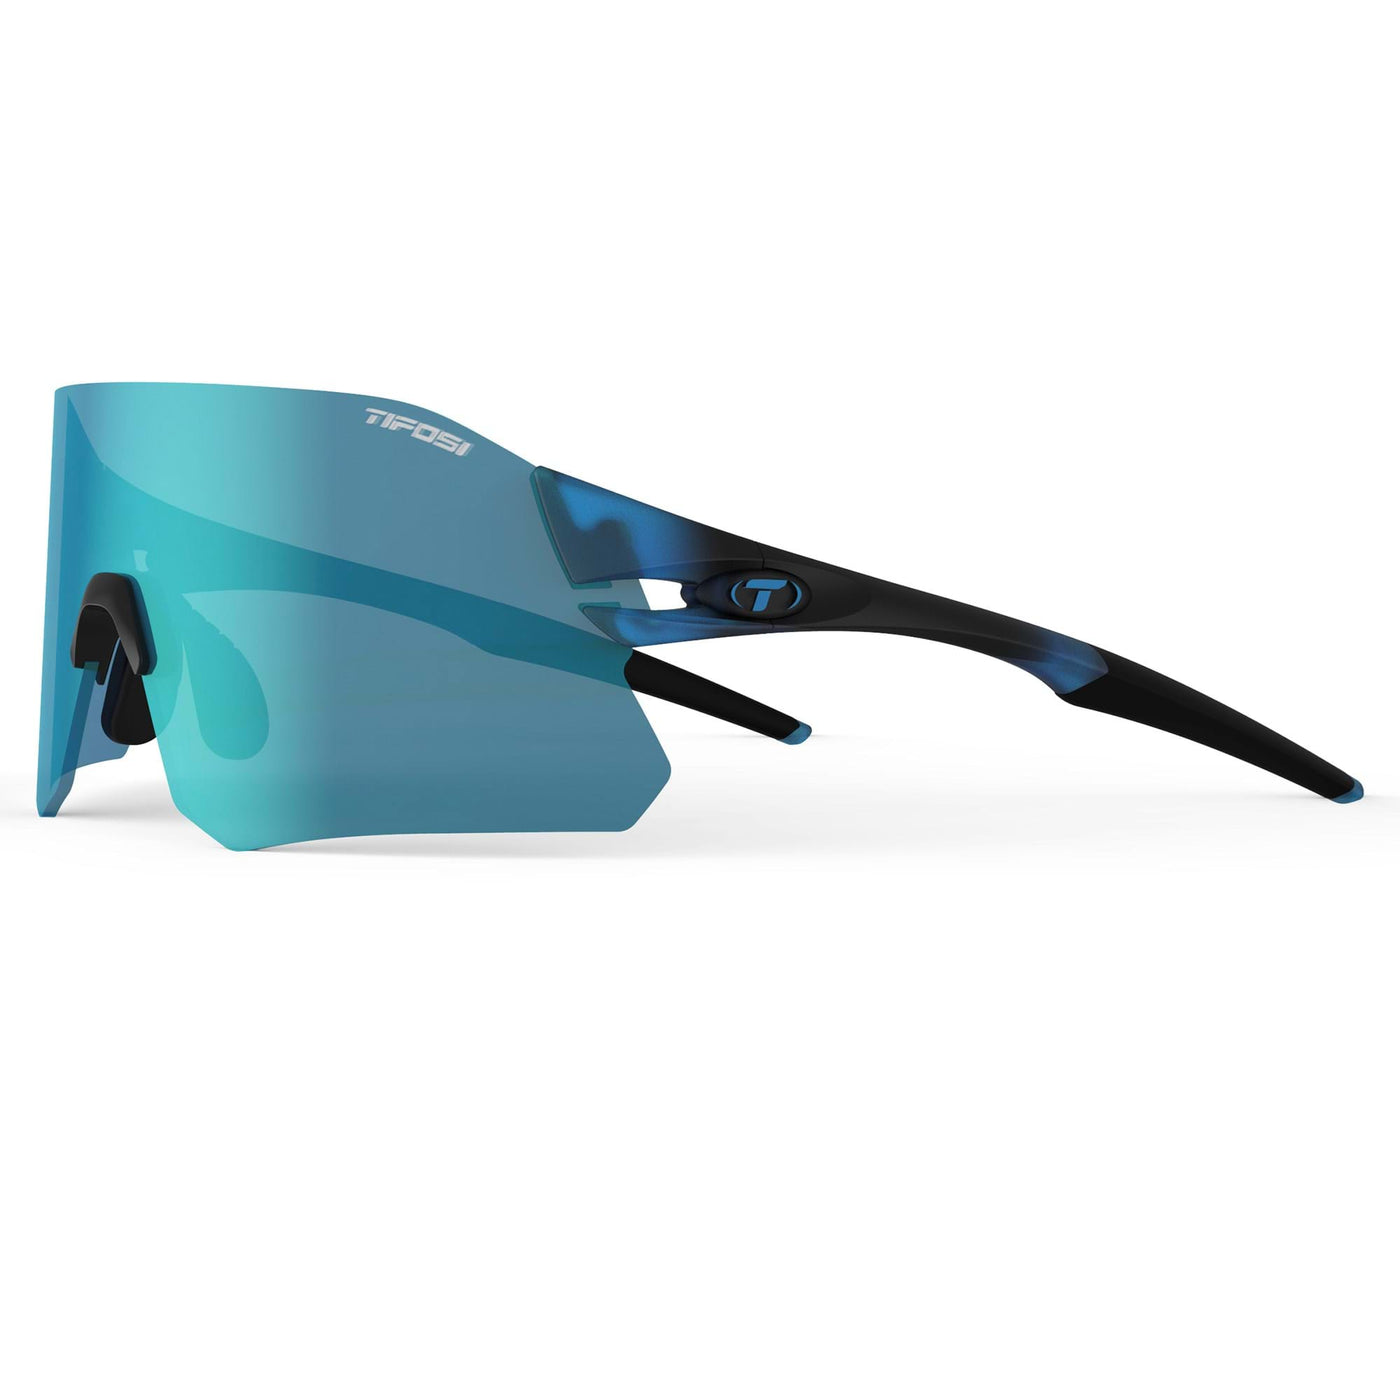 Tifosi Rail Interchangeable Clarion Lens Sunglasses